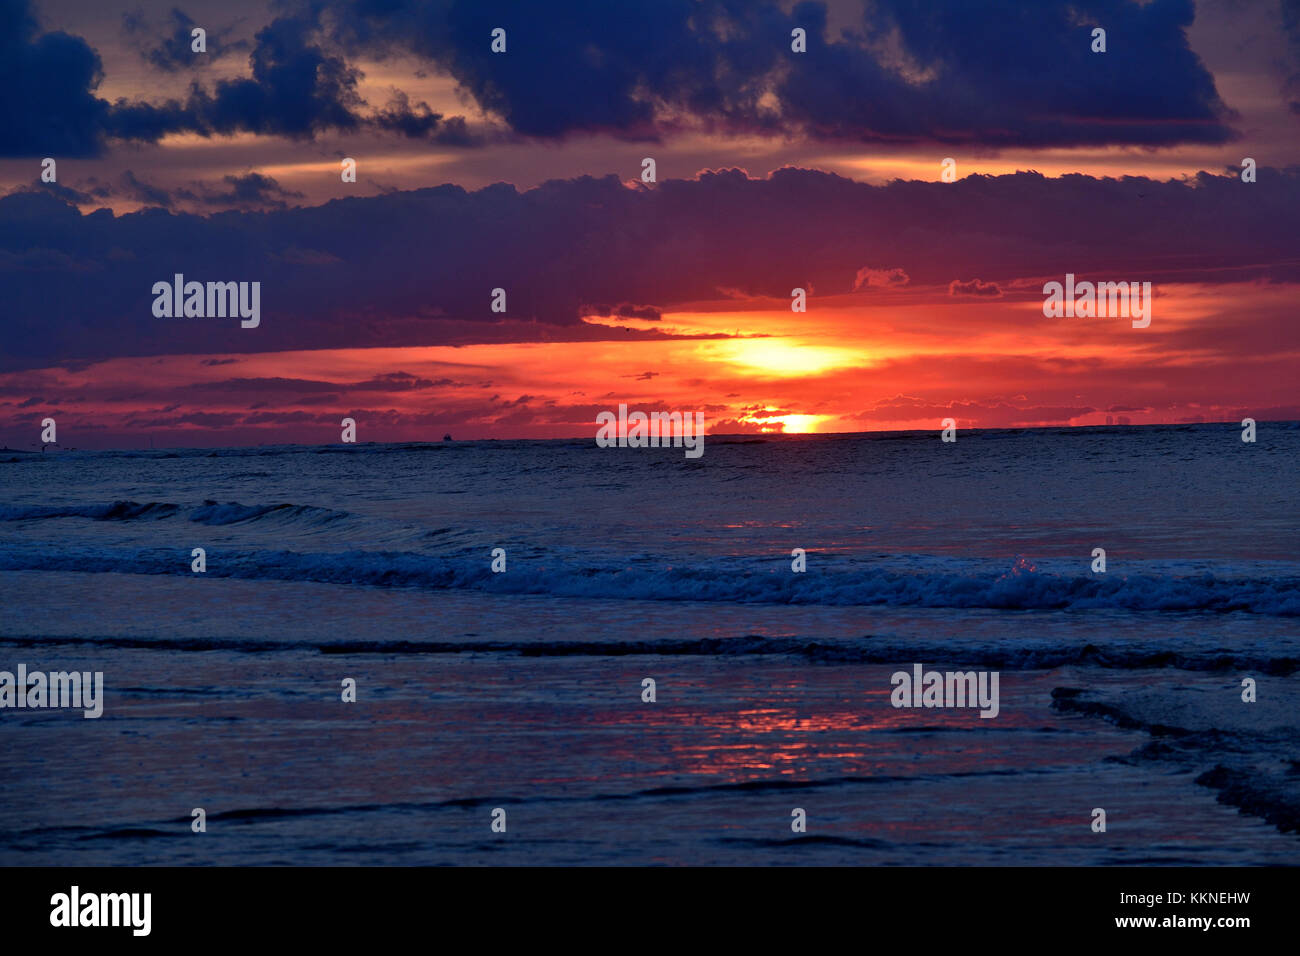 Brilliant Awe Inspiring Sunrise over the Ocean Stock Photo